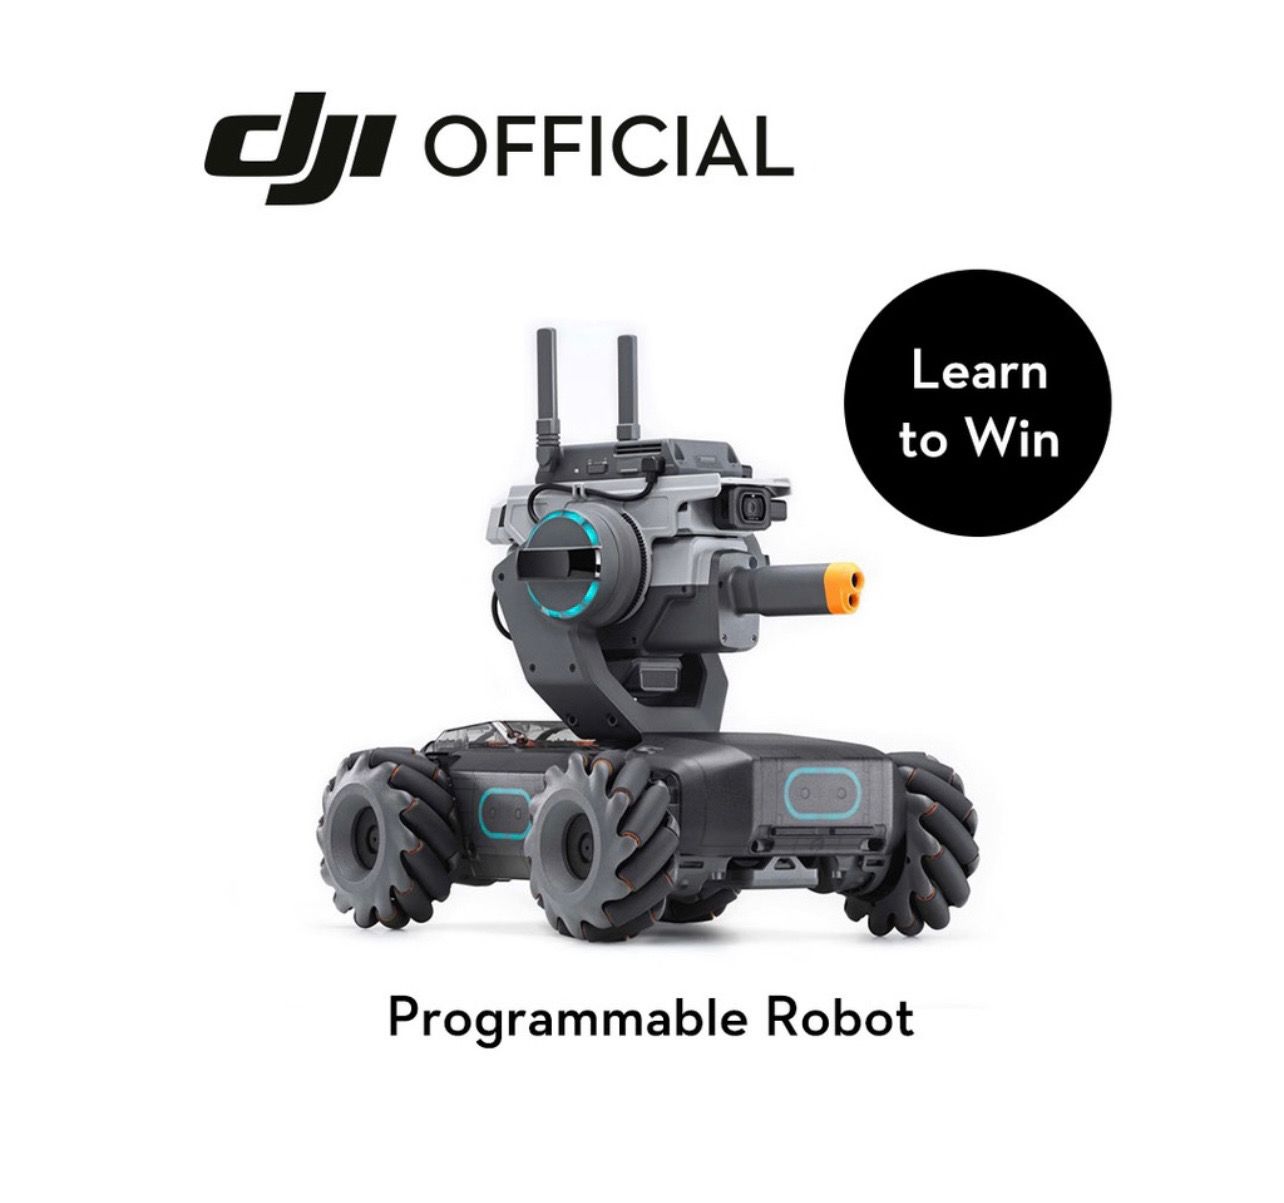 DJI Robomaster S1 (Educational Robot) - 1 Year Local DJI Warranty